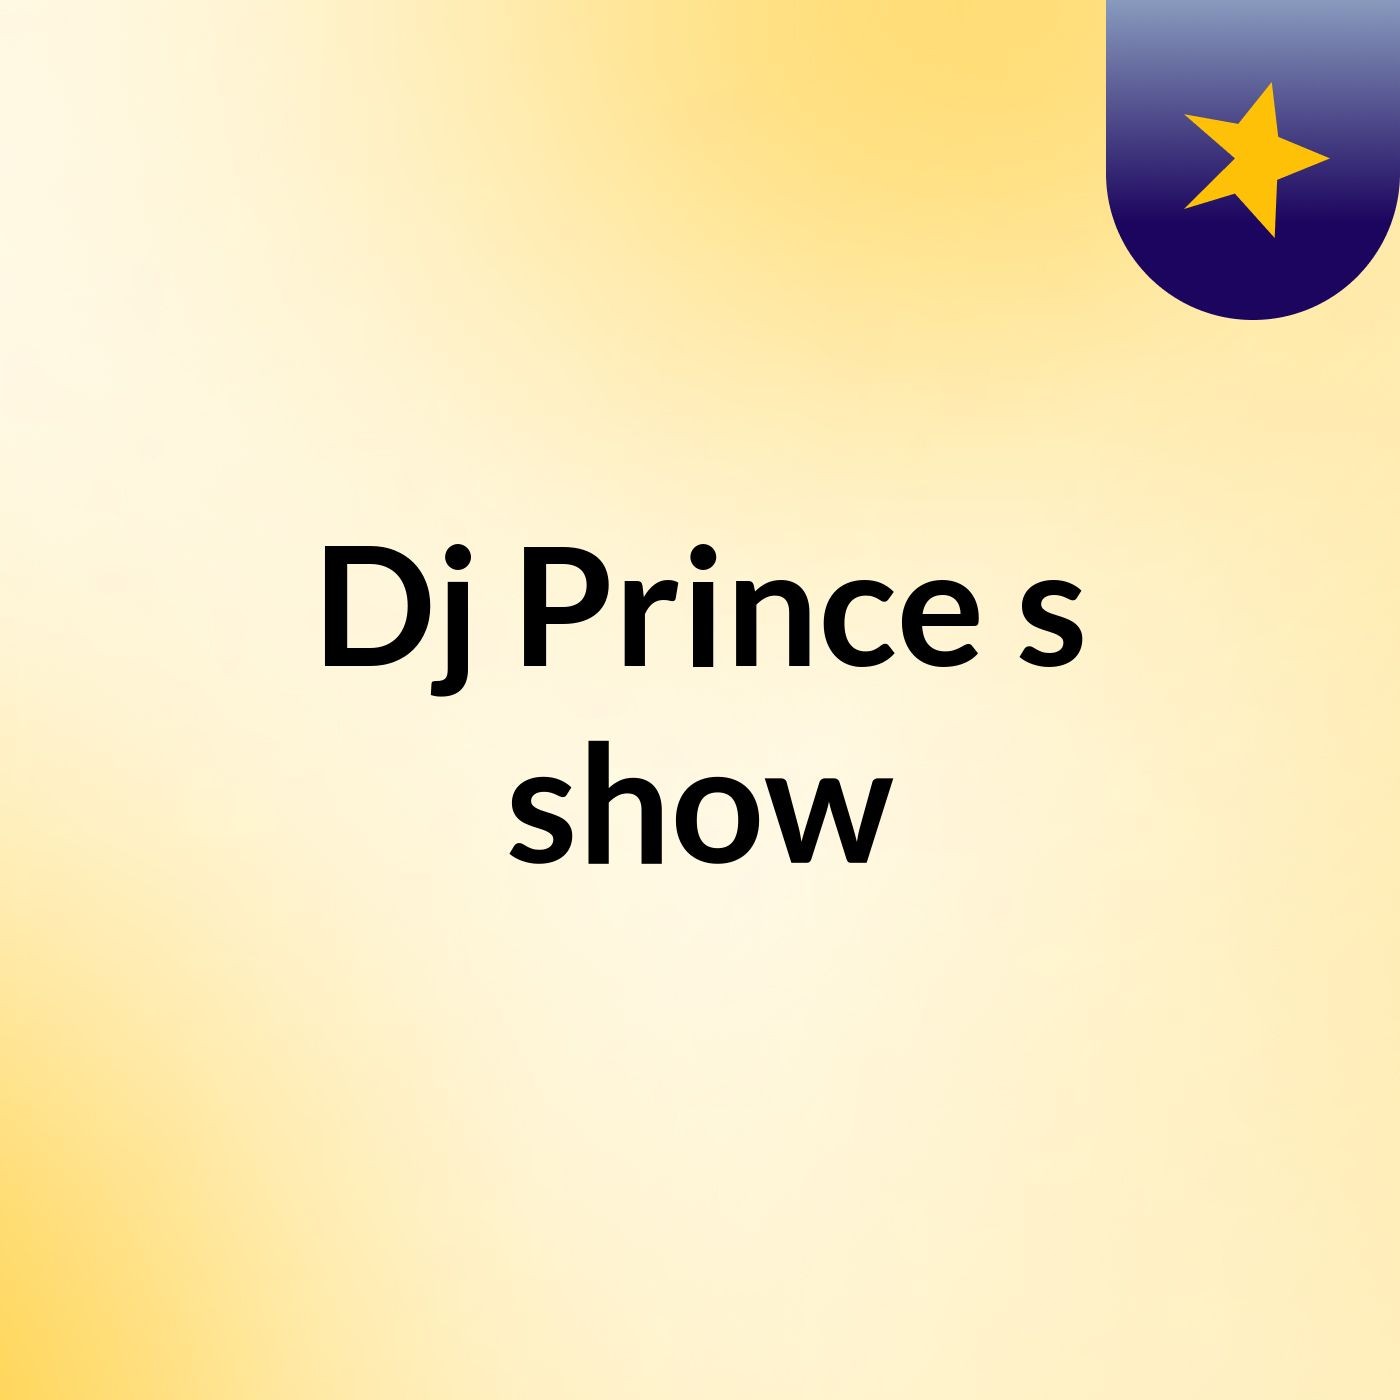 Dj Prince's show